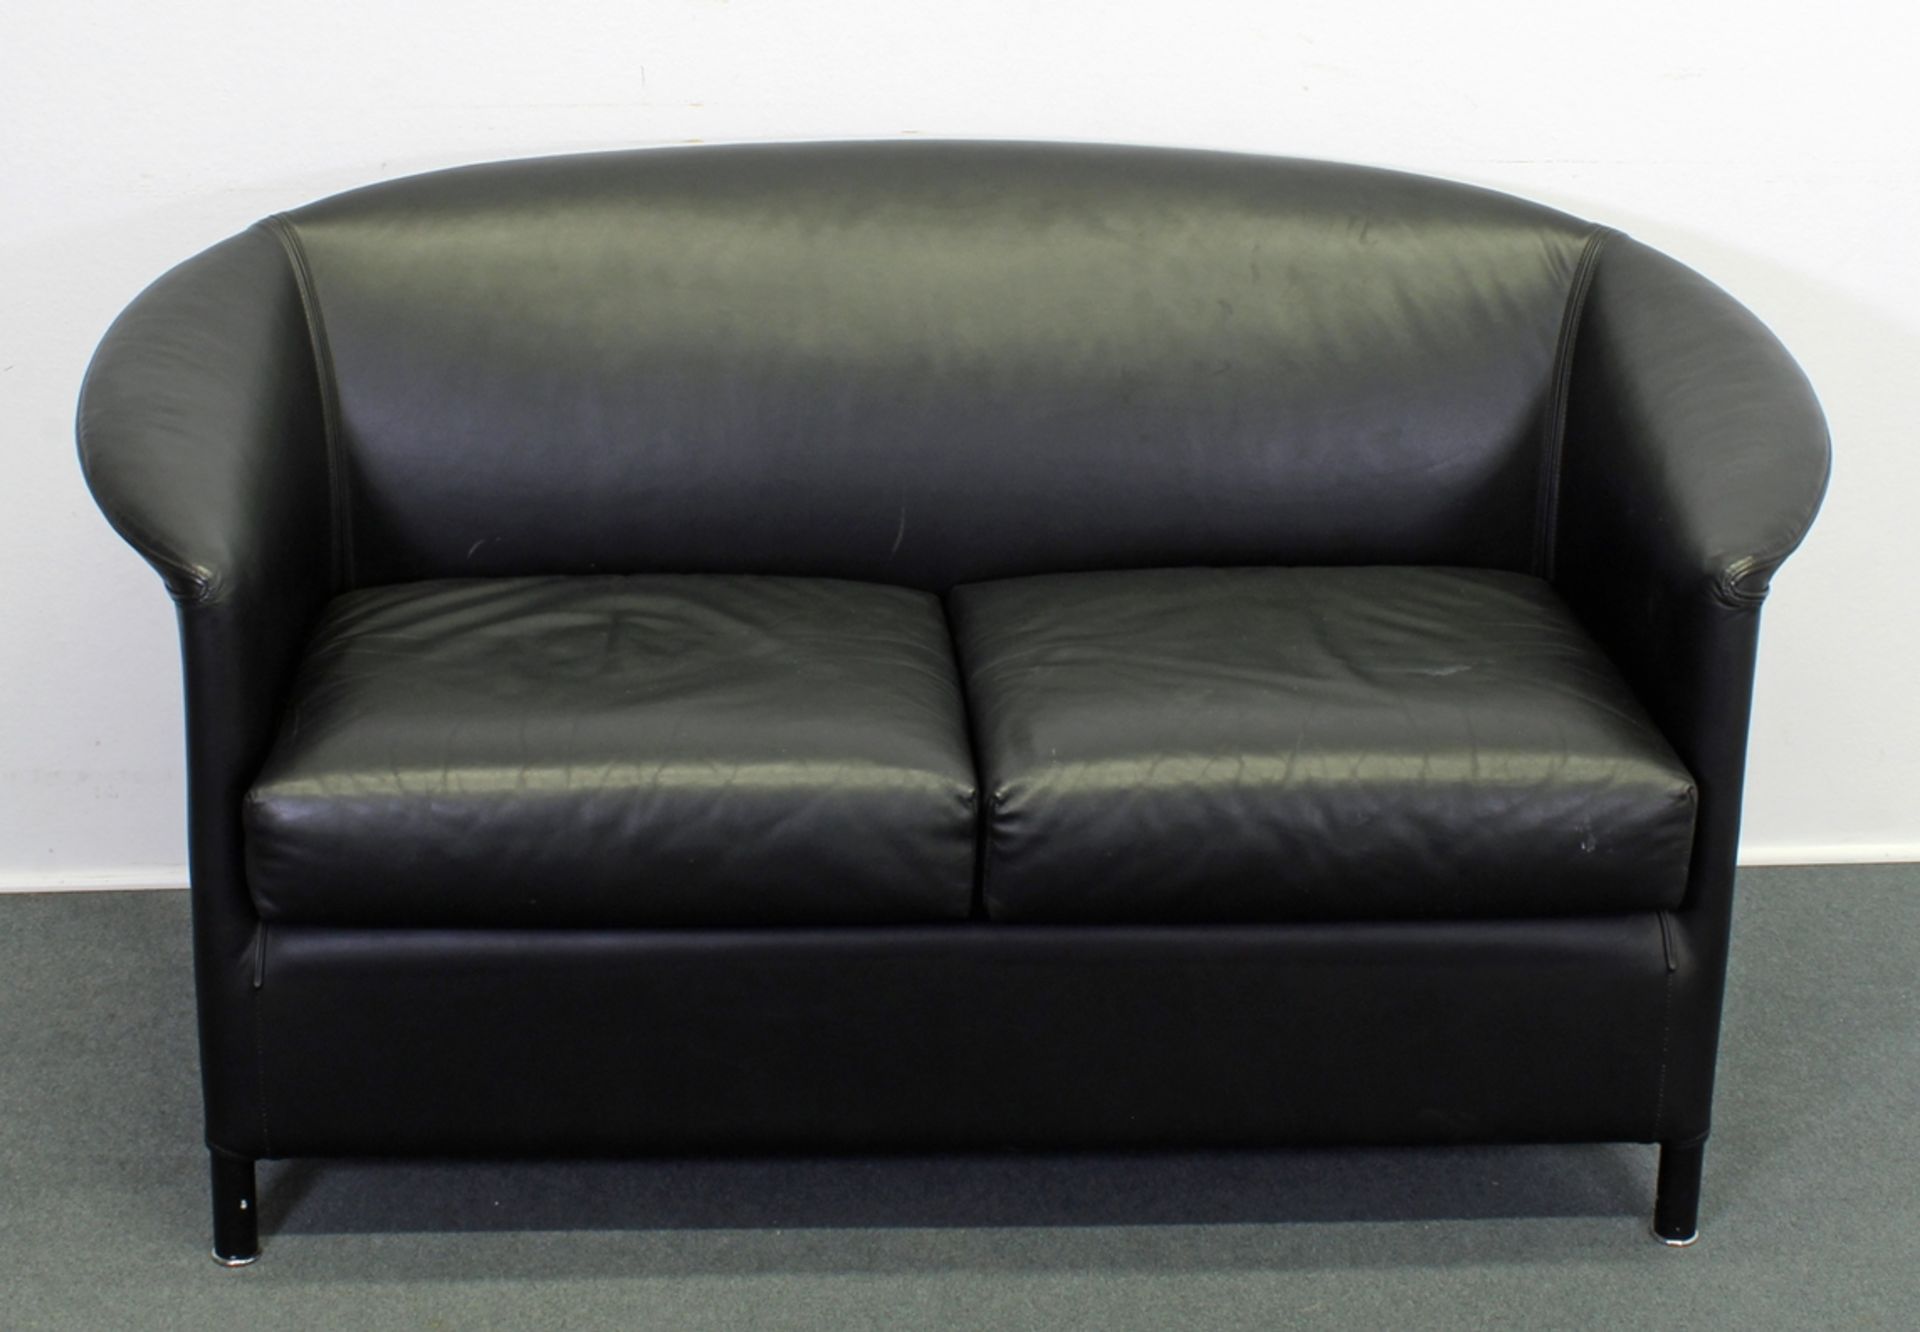 Sofa, 2,5-Sitzer, Wittmann, Modell "Aura", schwarzer Lederbezug, nach Entwurf Paolo Piva (1983), ca